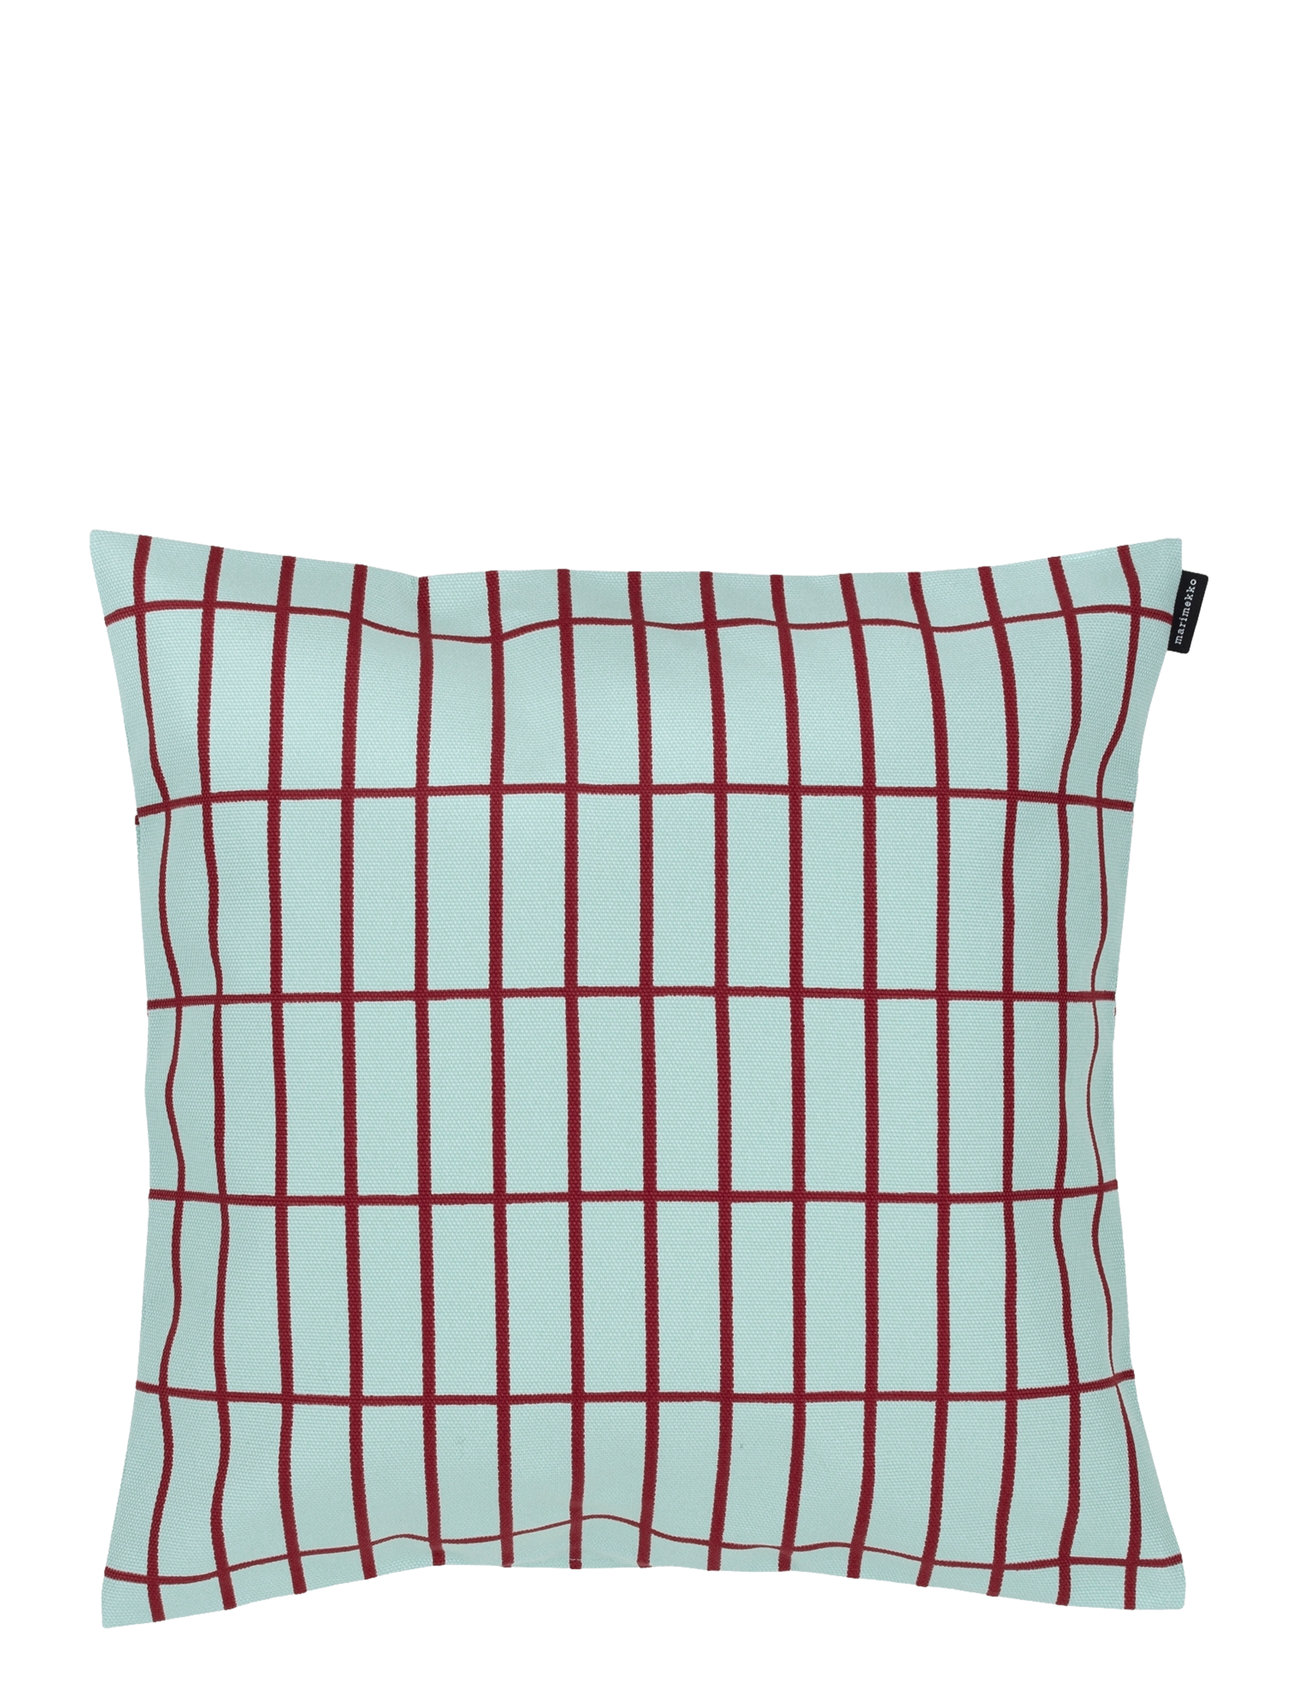 Pieni Tiiliskivi C.cover 40X40 Home Textiles Cushions & Blankets Cushion Covers Blue Marimekko Home